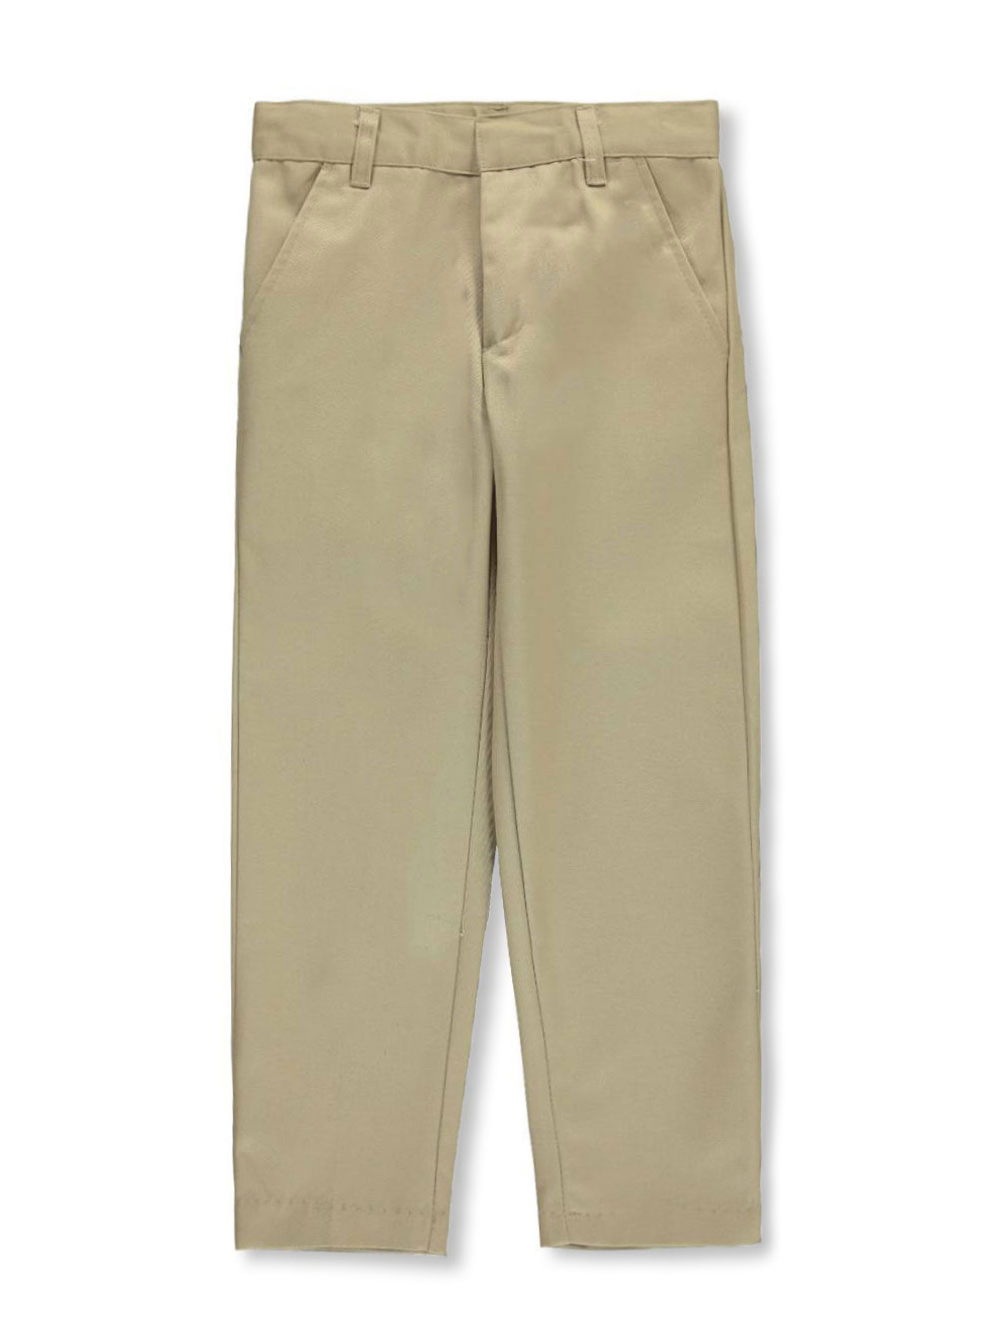 Girl's Navy Stretch School Uniform Pants 5-16 – unik Retail